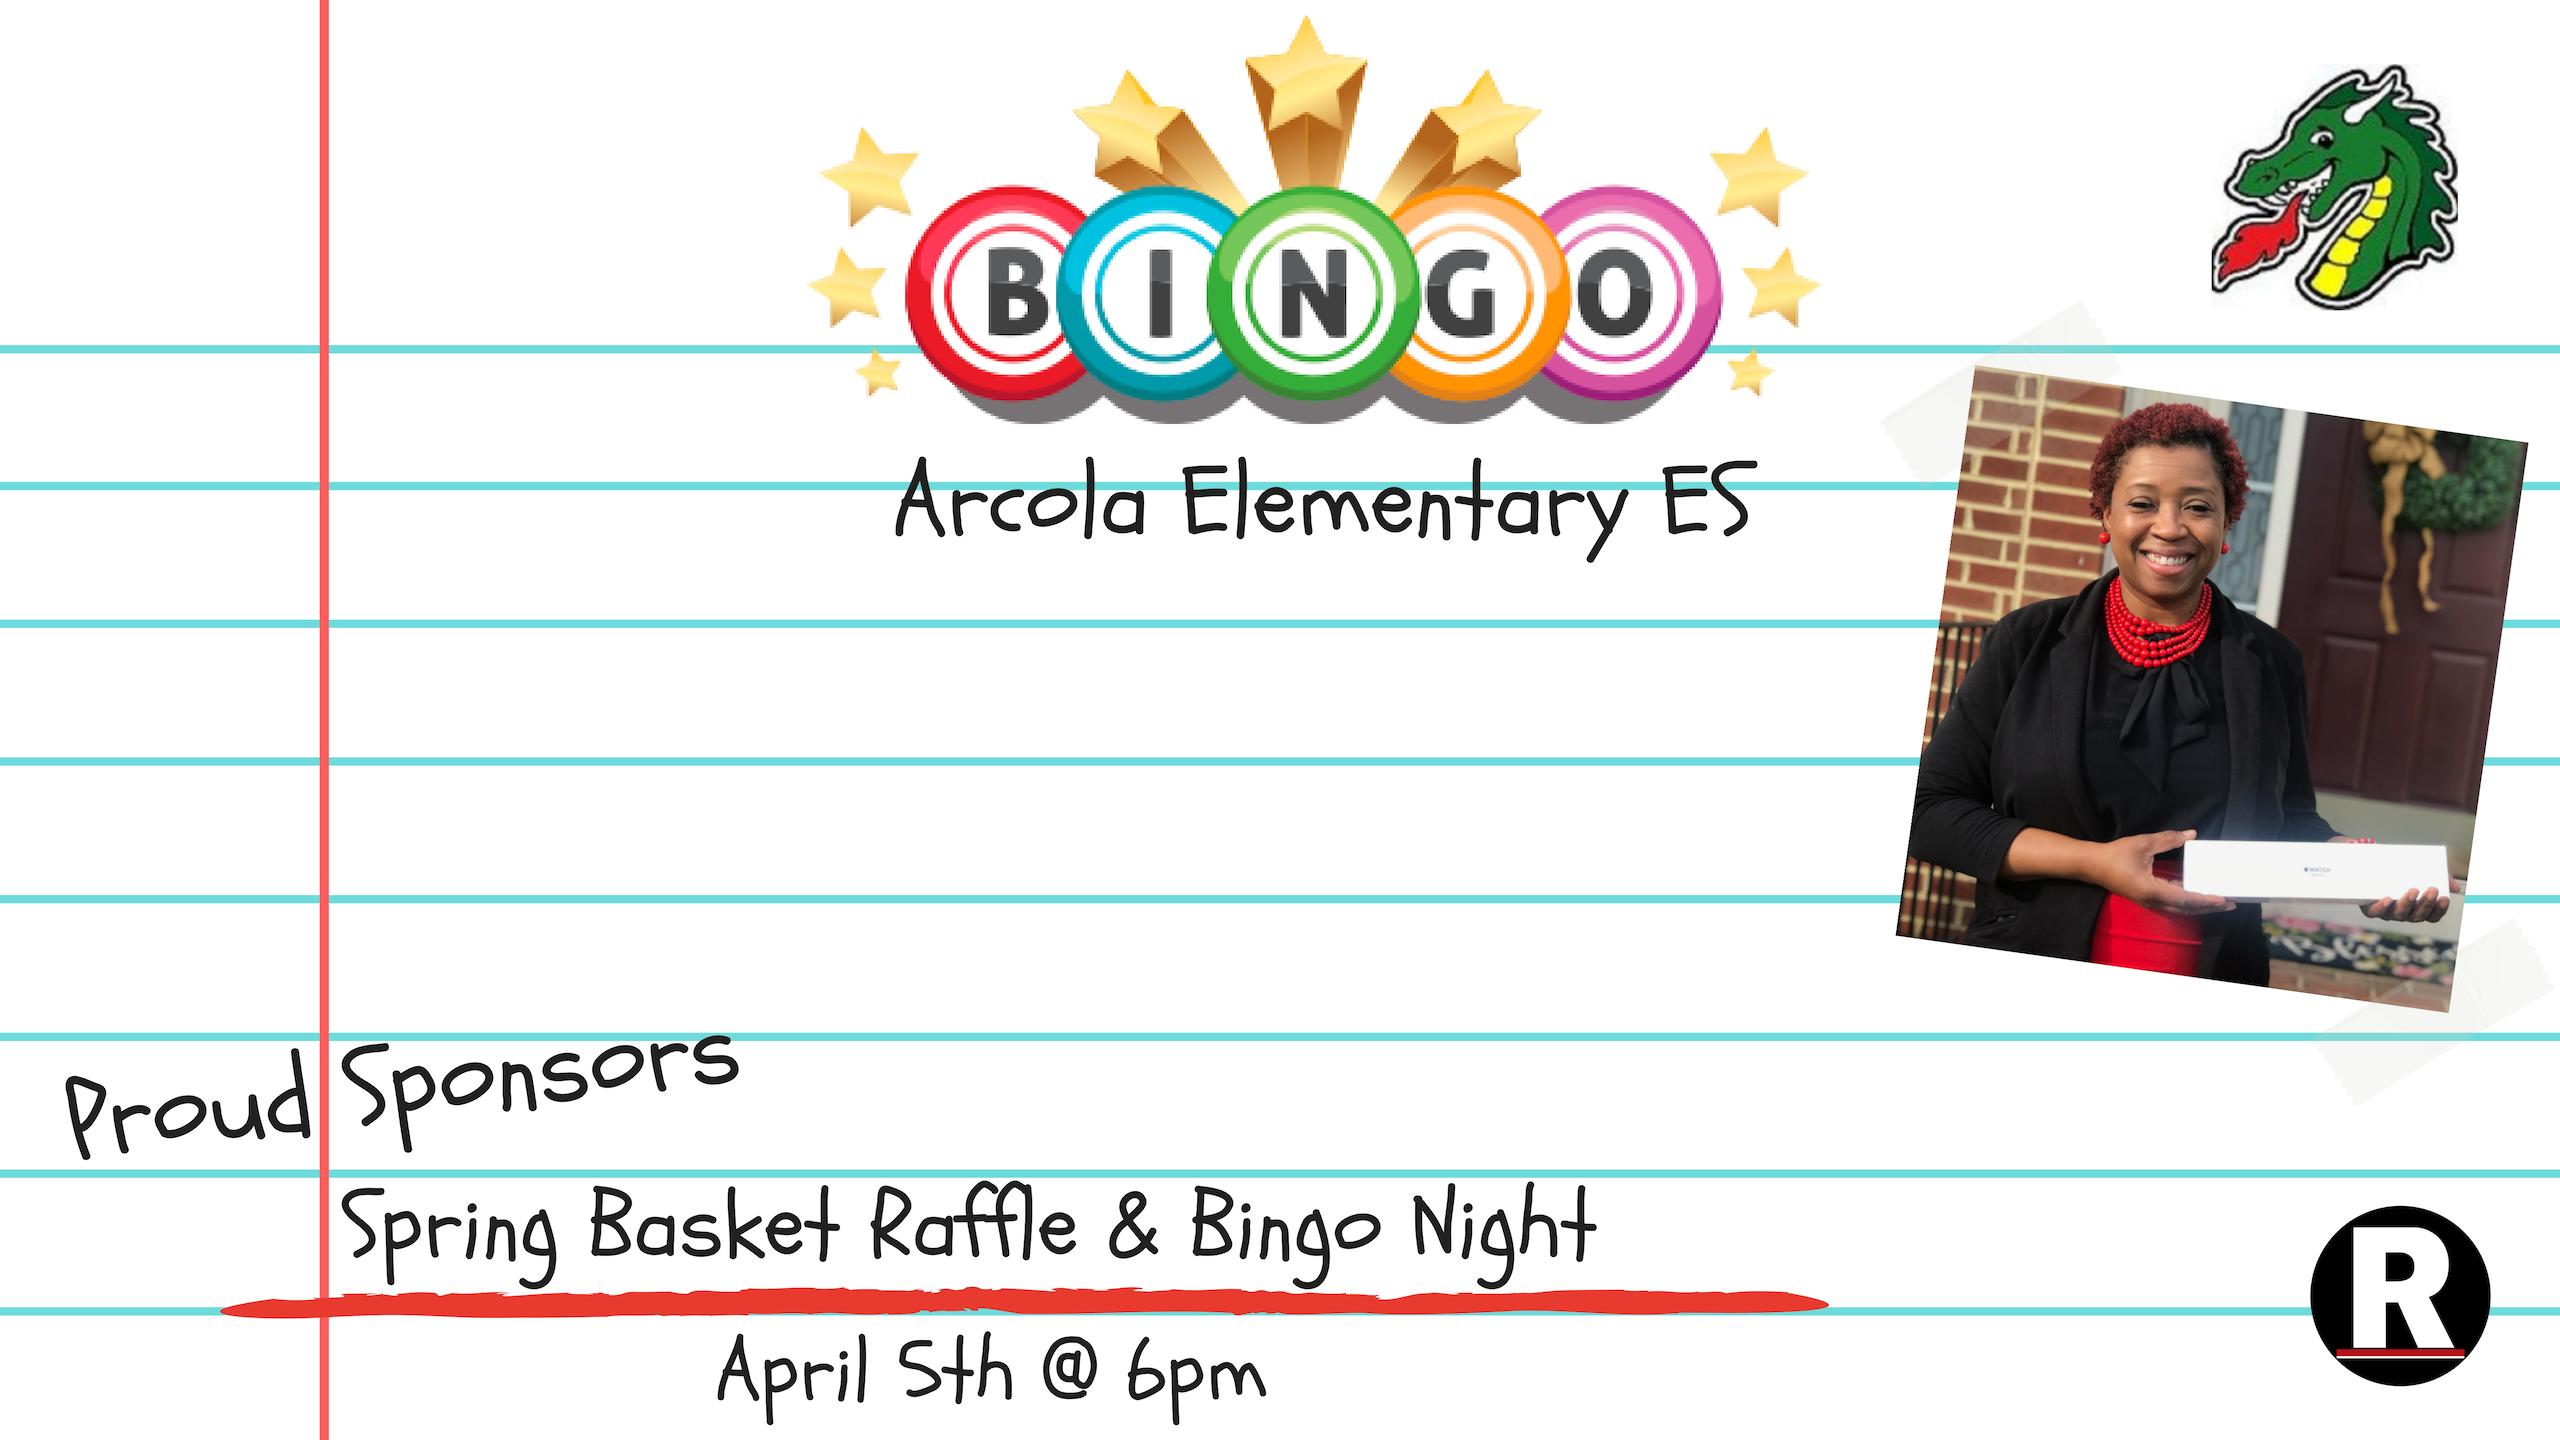 Proud Sponsor of Arcola Elementary School’s Spring Basket Raffle Event